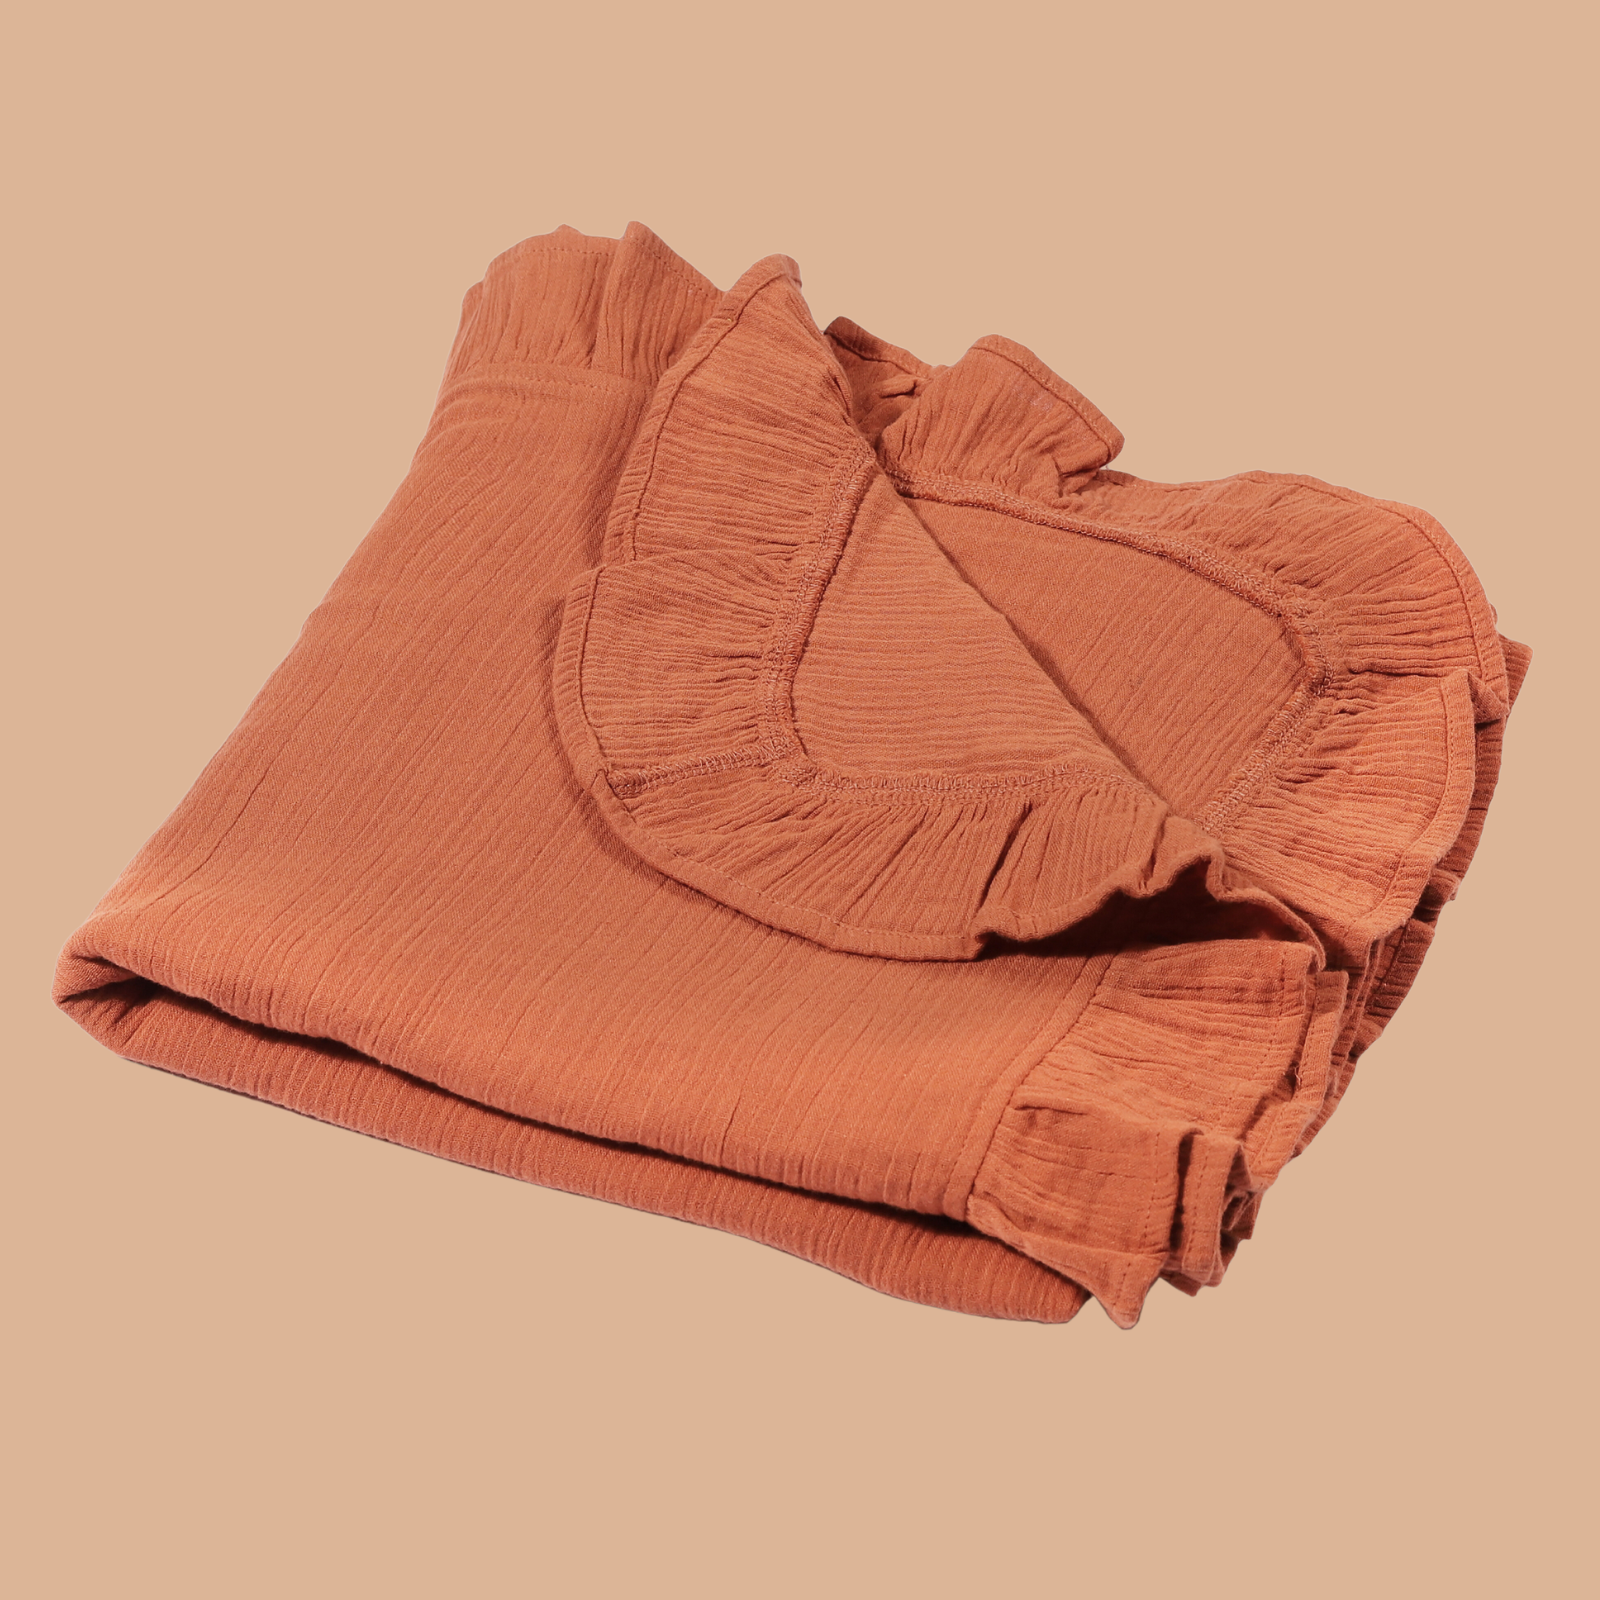 Greendeer 100% Crinkle Cotton Rust Swaddle Cloth